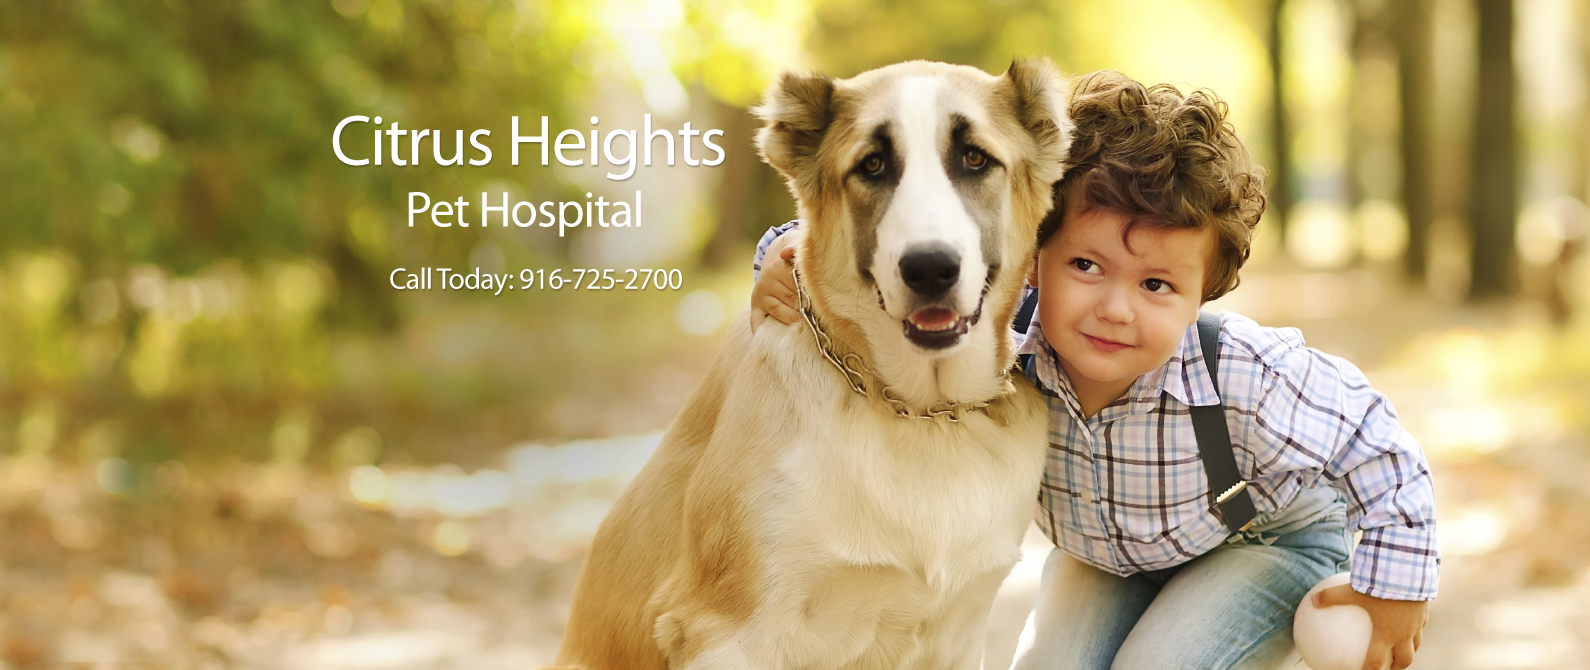 Citrus Heights Pet Hospital